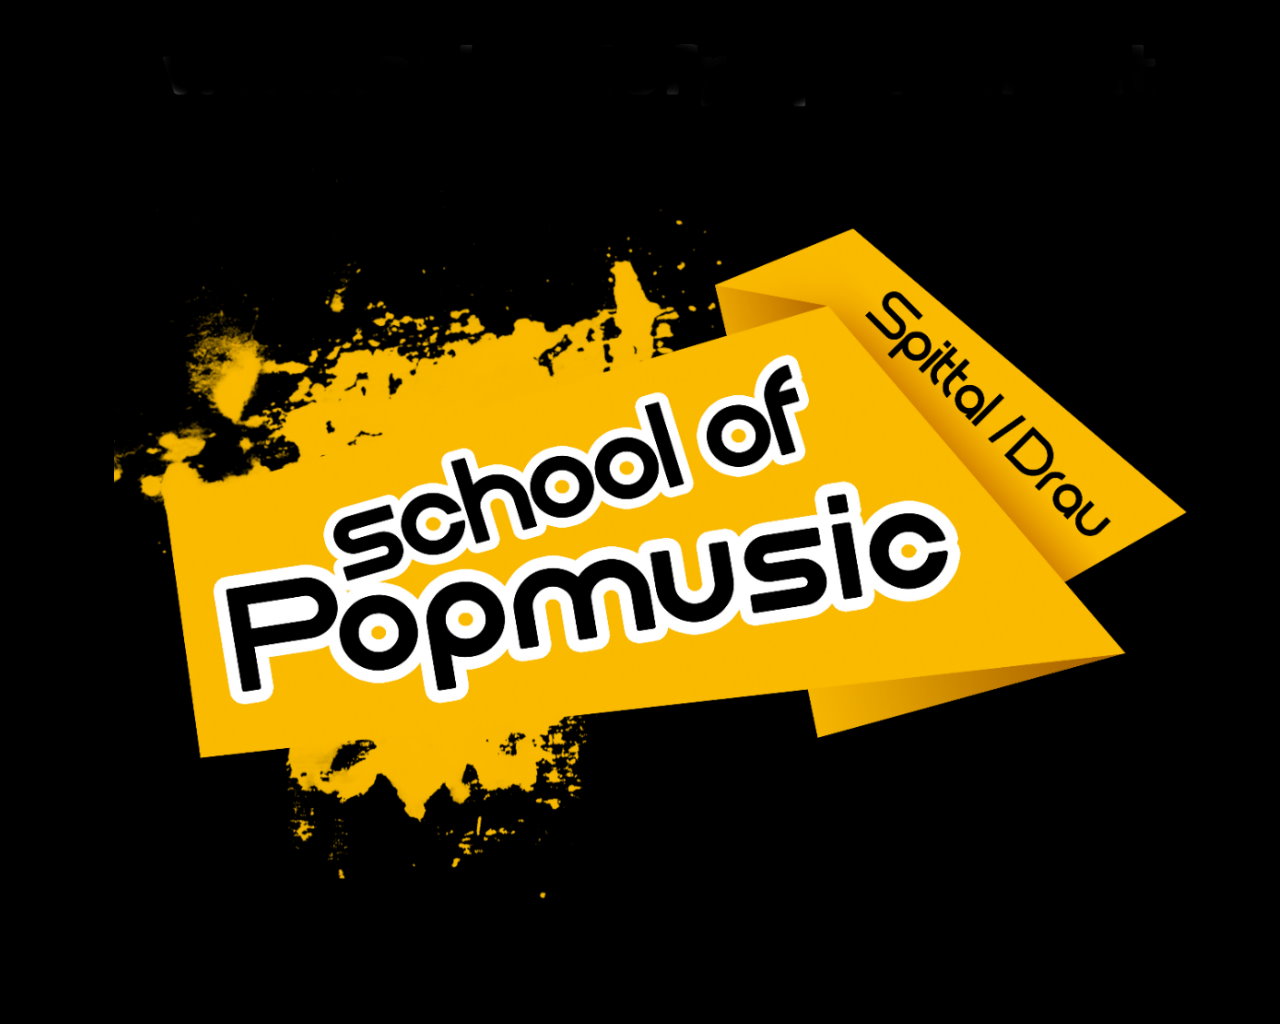 Bilder School of Popmusic Spittal, S.O.P. - Büro S. Petritz / Unterricht Koschatstraße 42- Eingang Badgasse 5